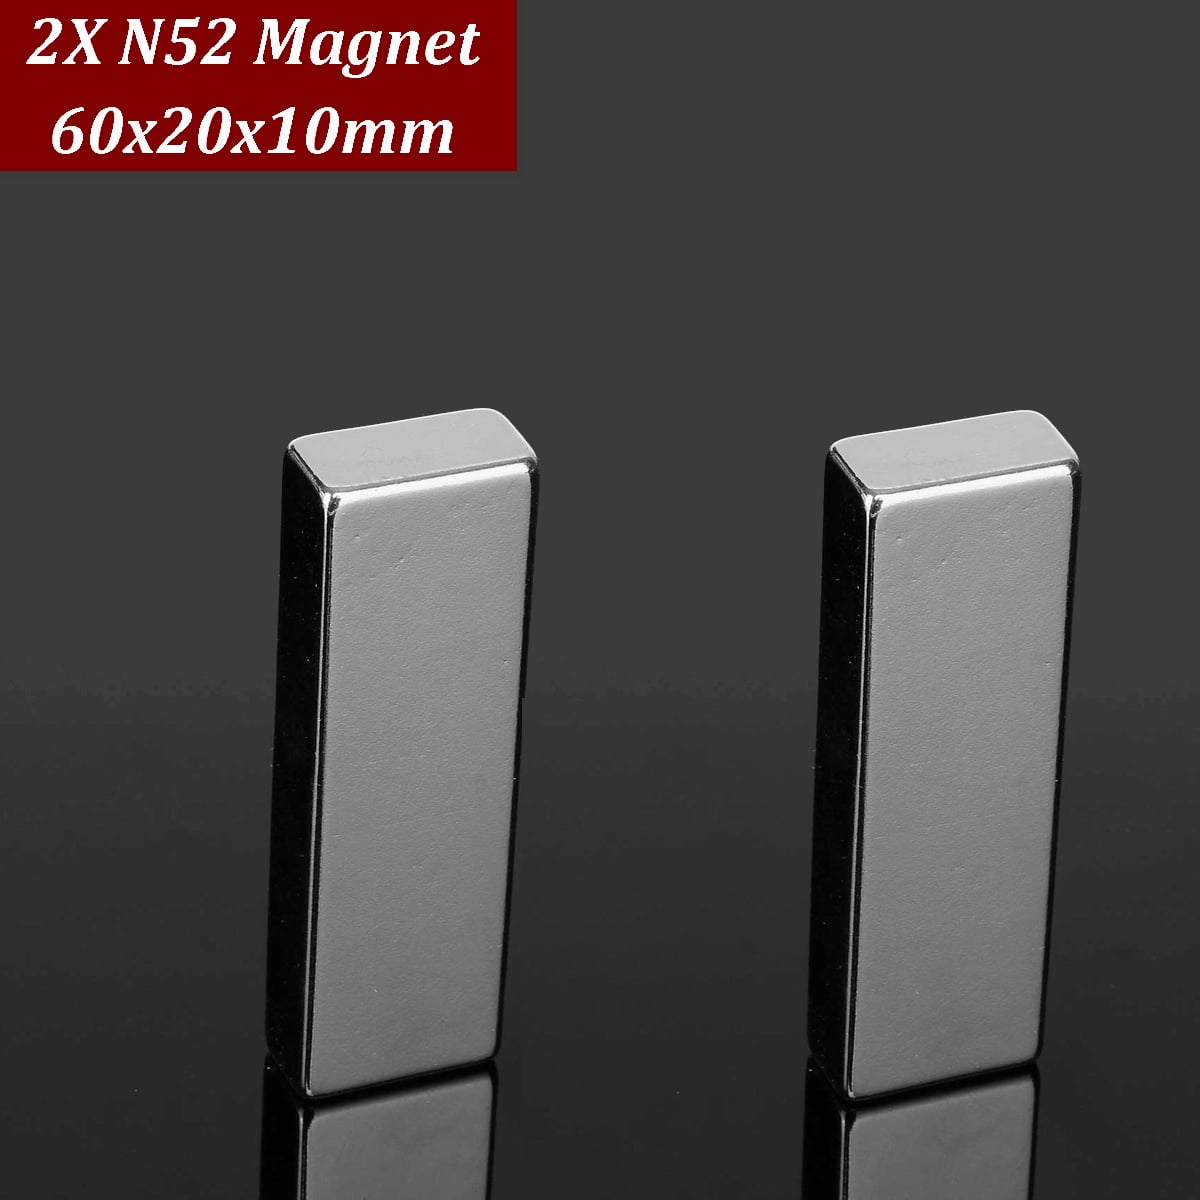 N52 Block Super Strong Magnet Neodymium Permanent Rare Earth Magnet 60x20x10mm 